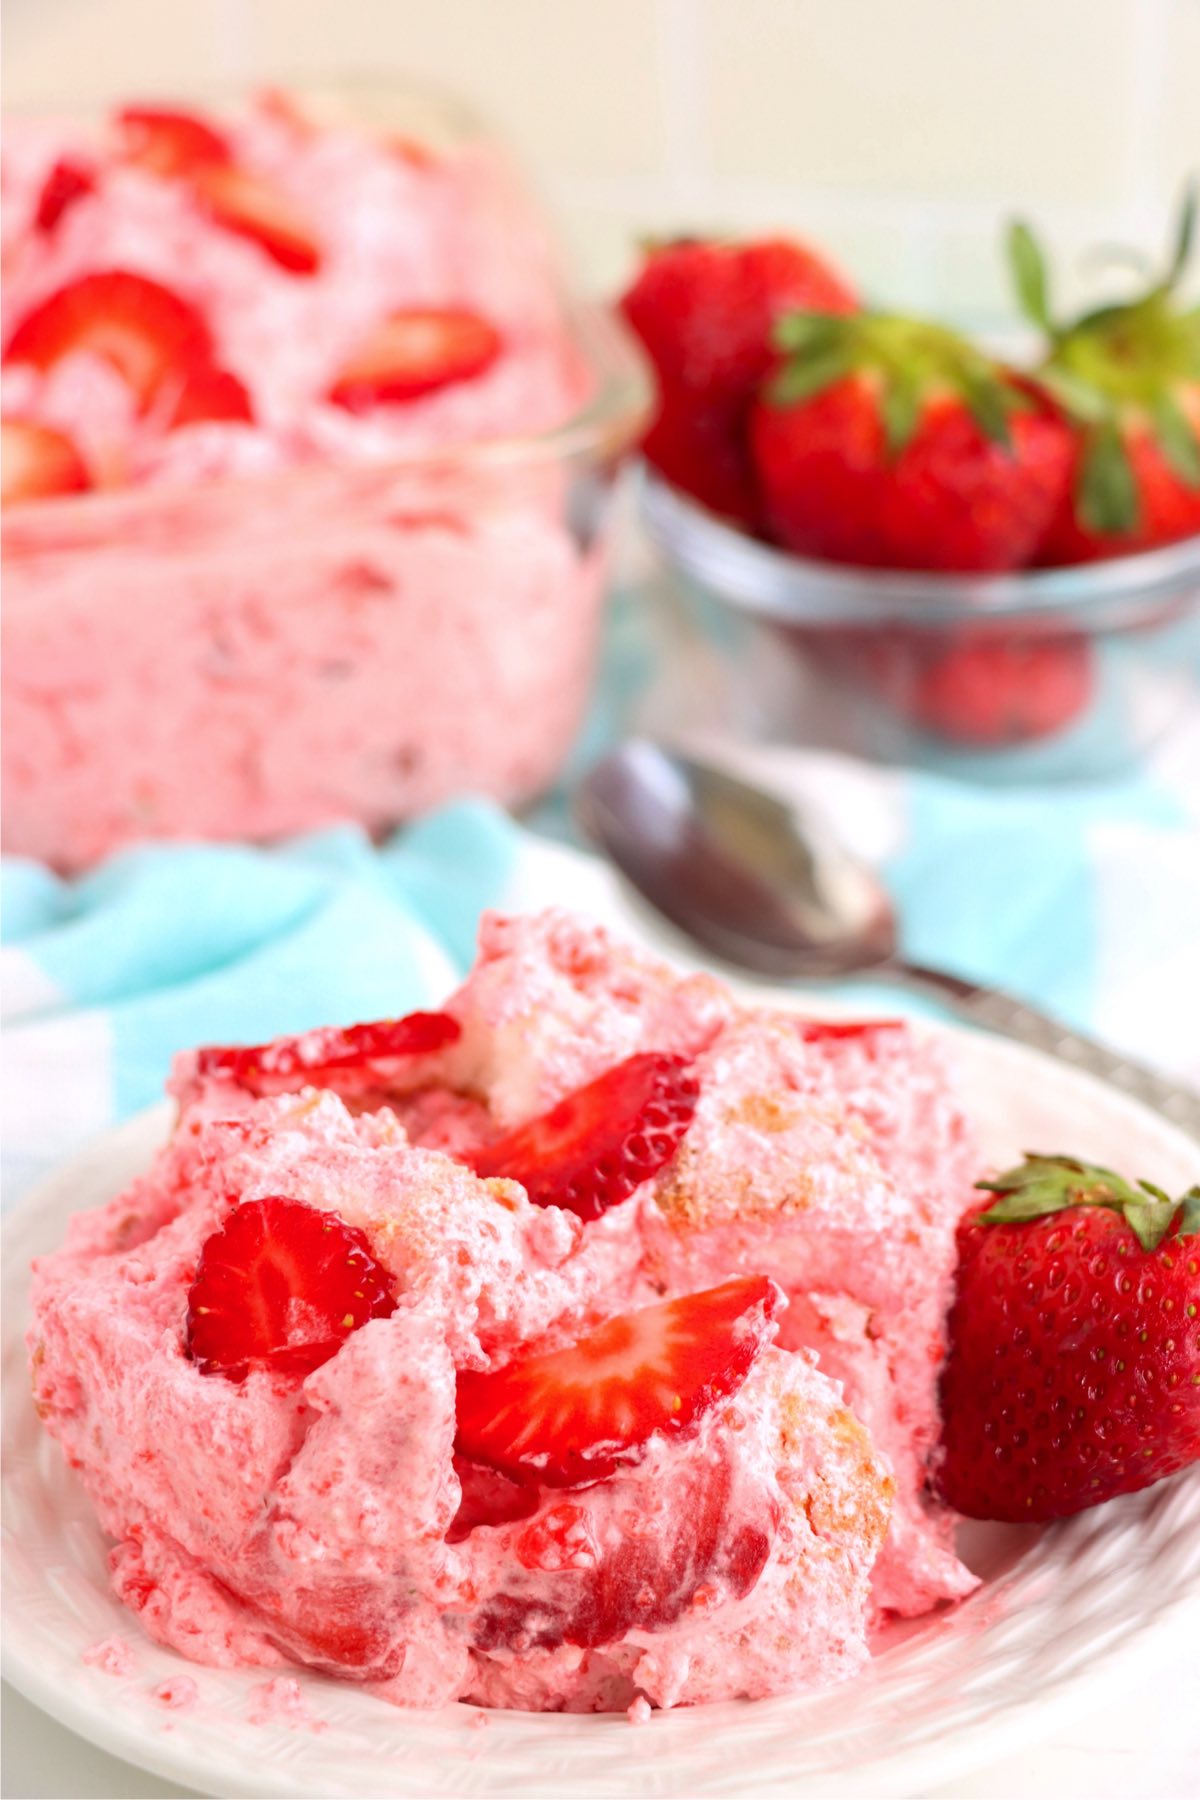 scoopful of strawberry jello dessert on a plate